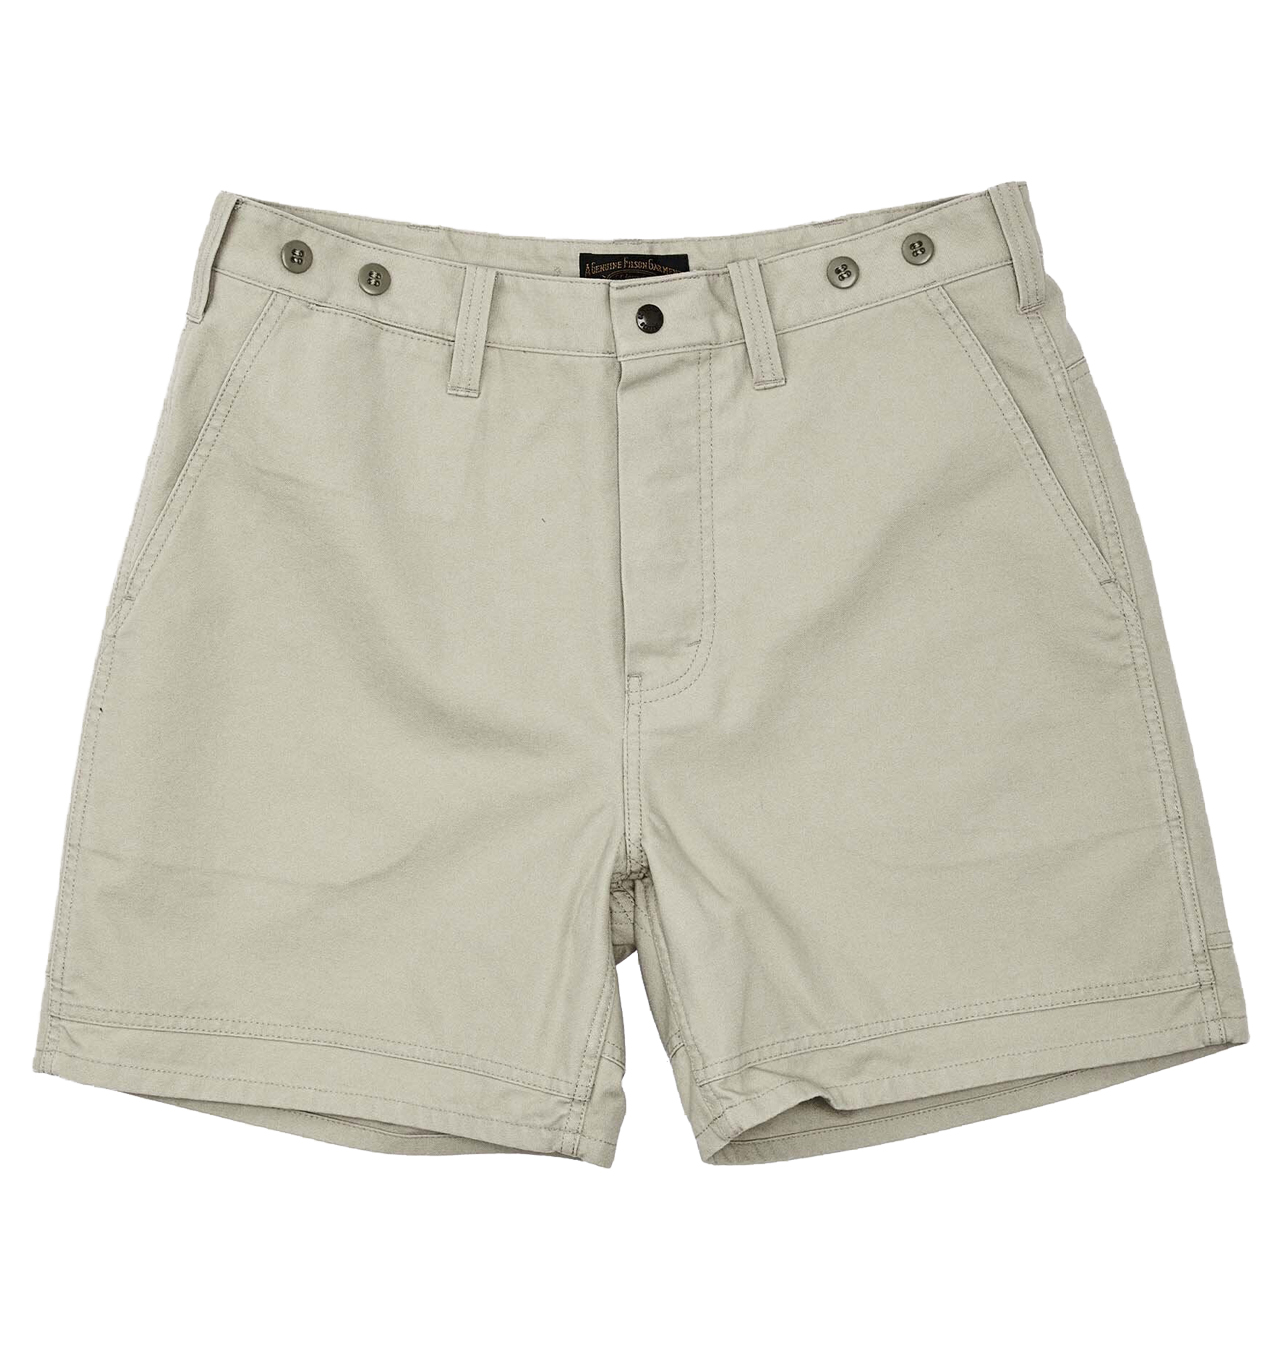 Filson - Dry Tin Shorts - Surplus Tan